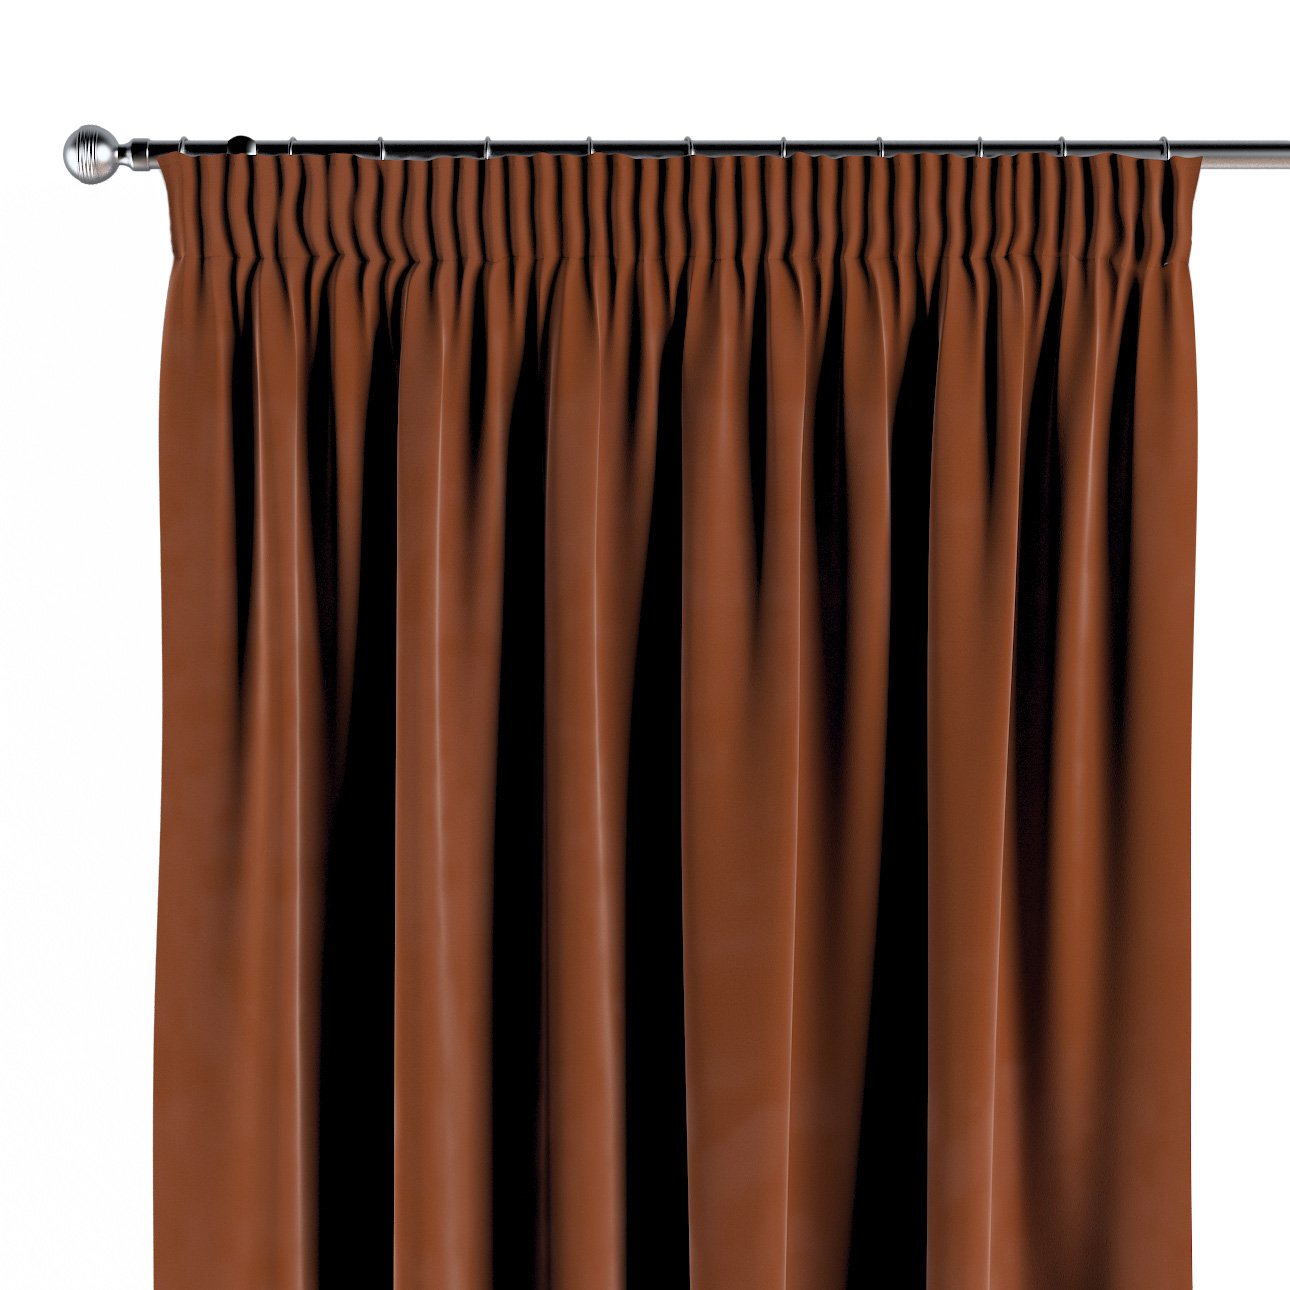 Vorhang mit Kräuselband, braun-karamell, 704-33